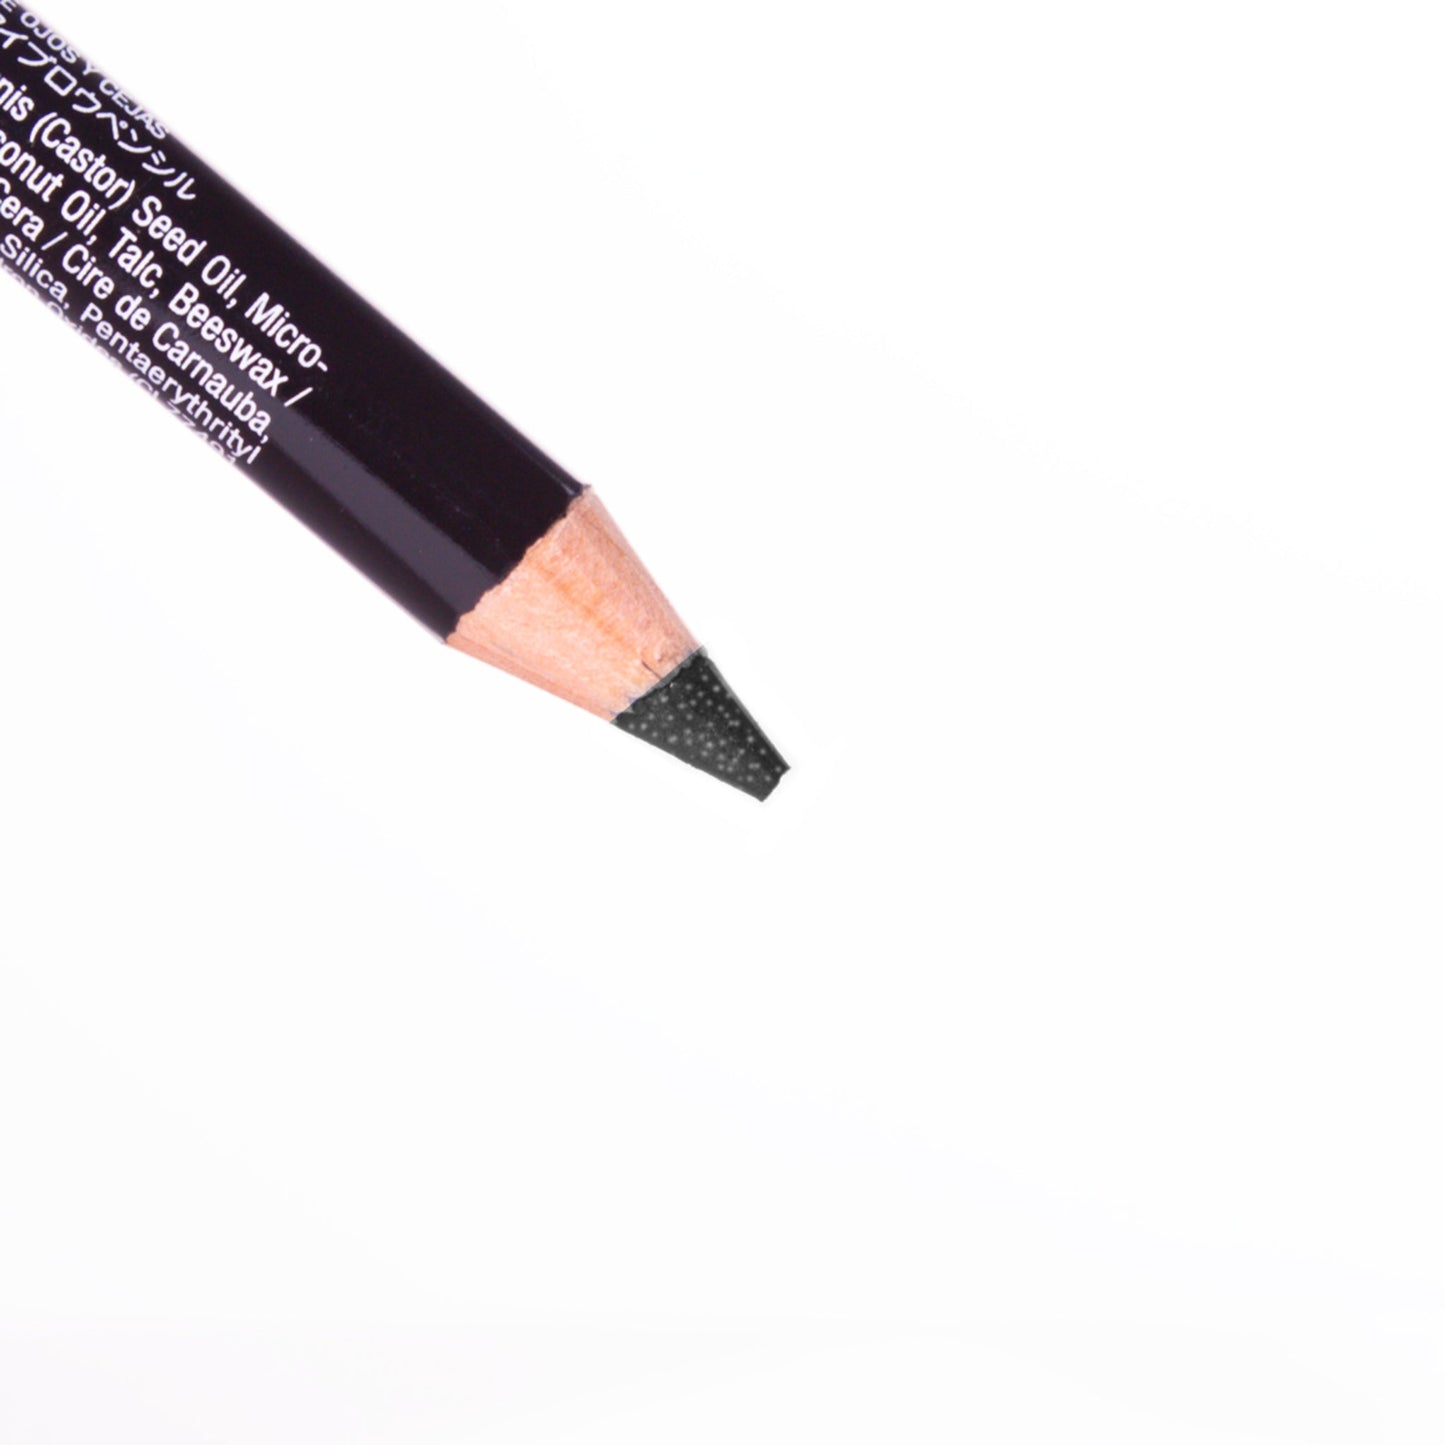 NYX Slim Eye Pencil - Black Shimmer